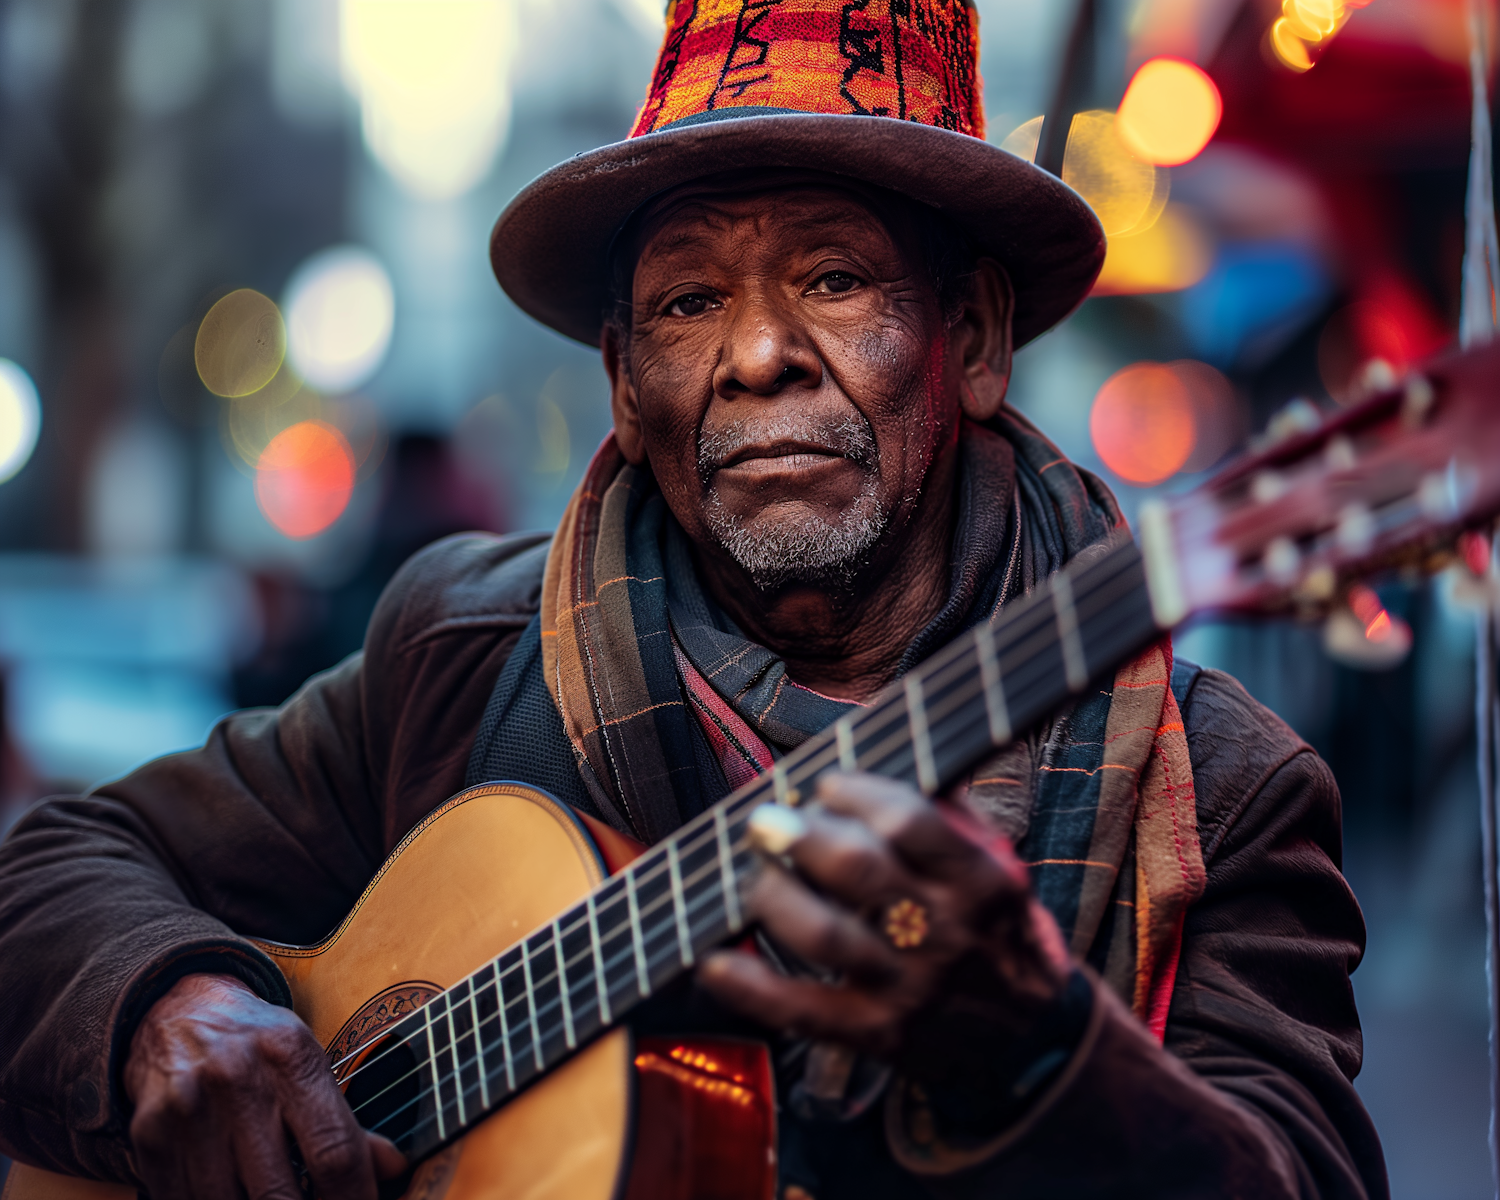 Elderly Musician in Urban Setting